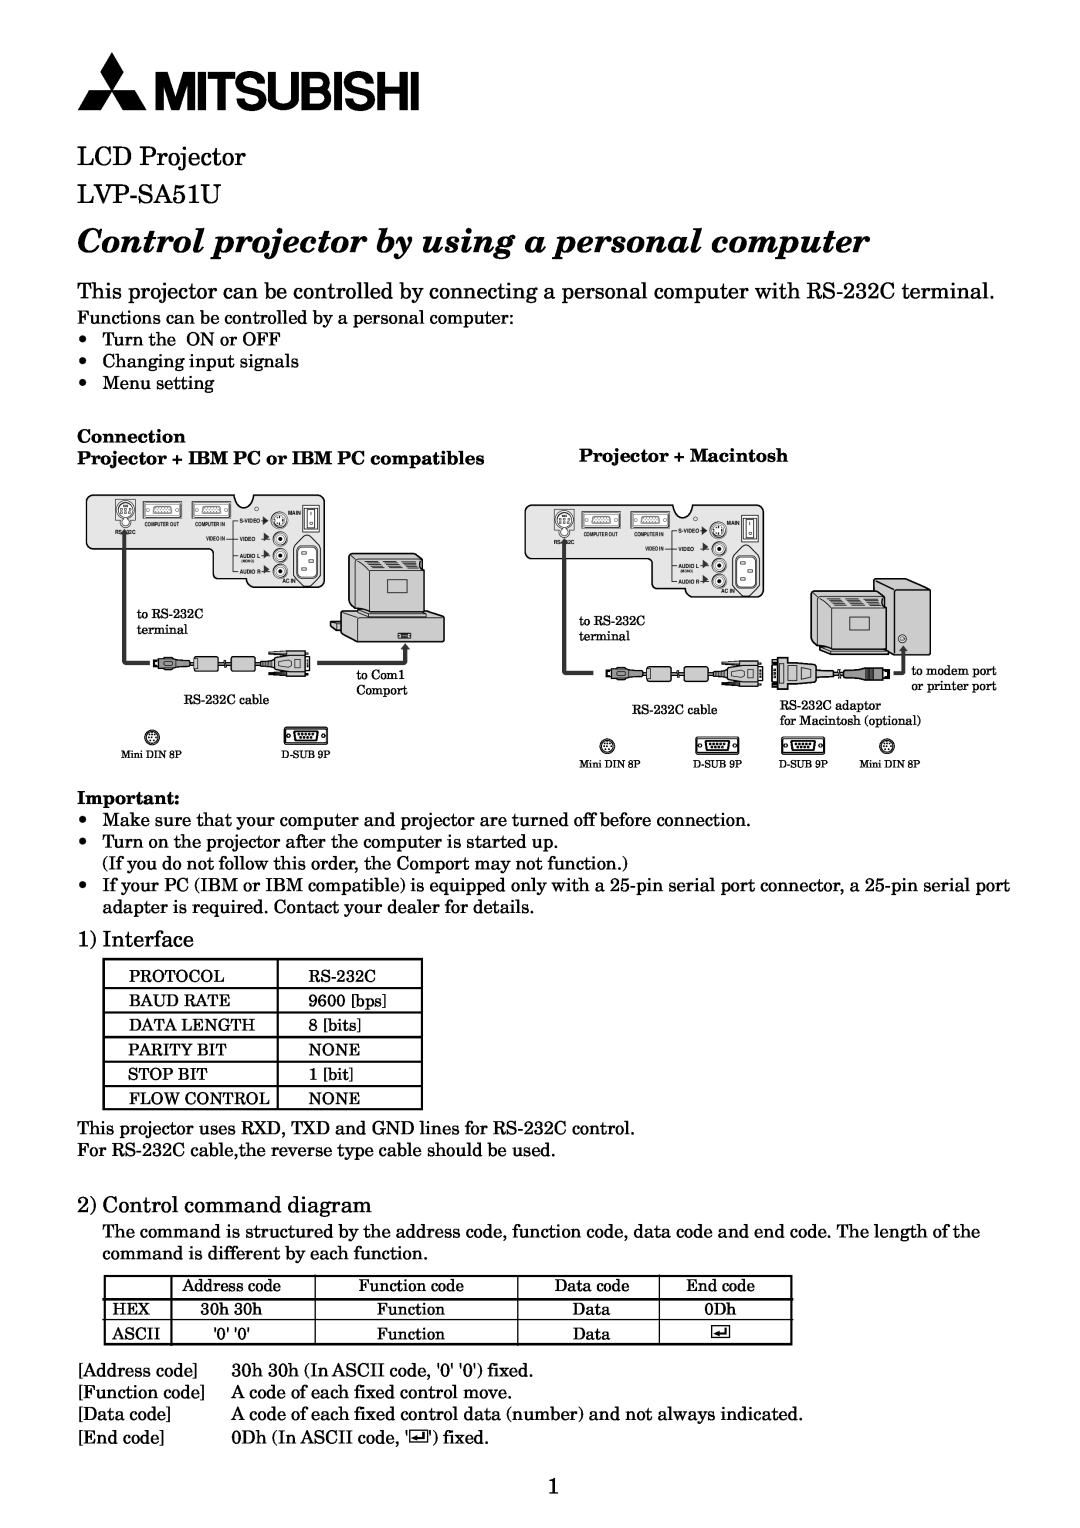 Mitsubishi Electronics user manual Control projector by using a personal computer, LCD Projector LVP-SA51U 